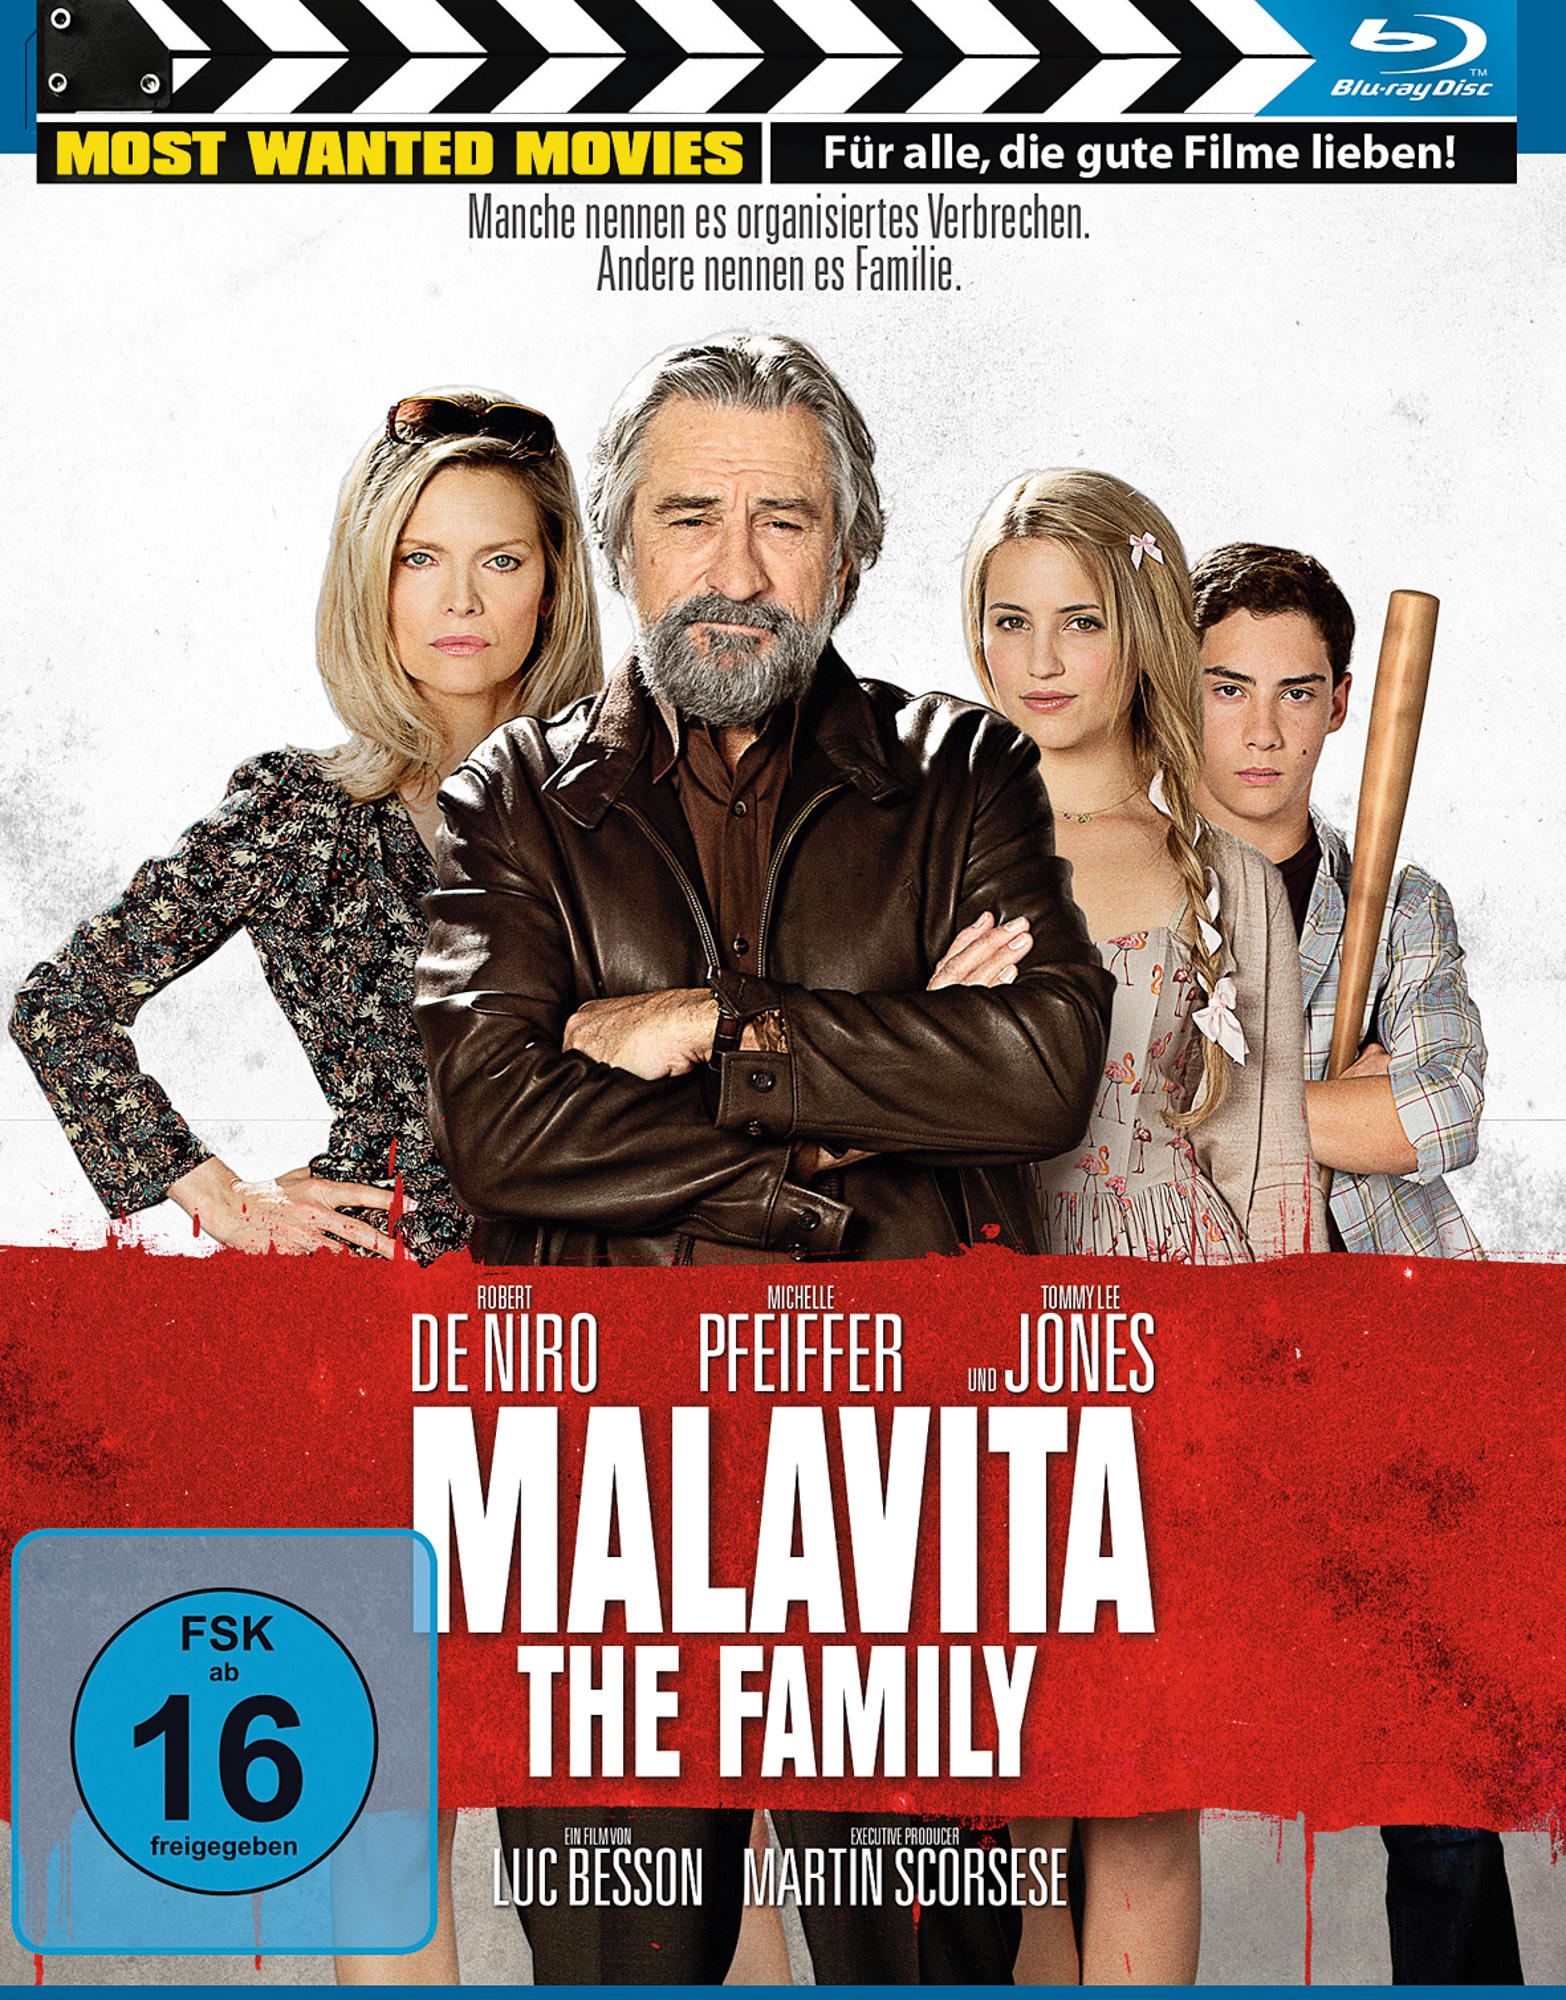 Malavita - The Family Blu-ray